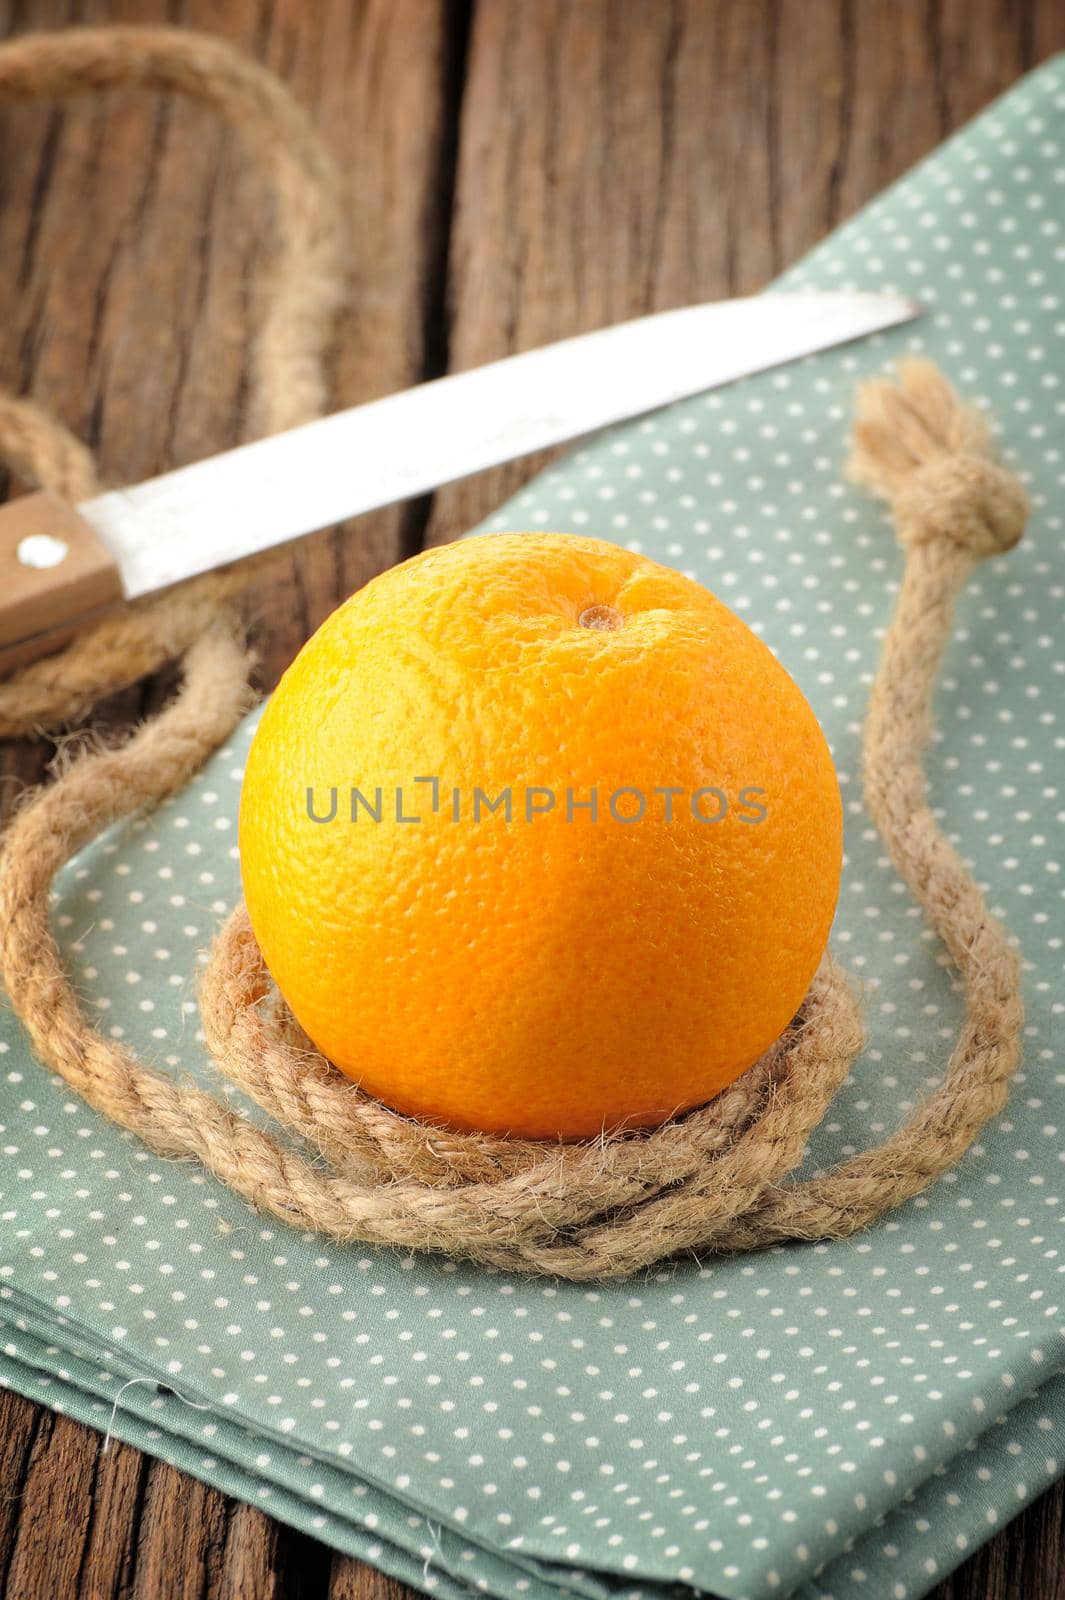 Ripe orange on wooden table